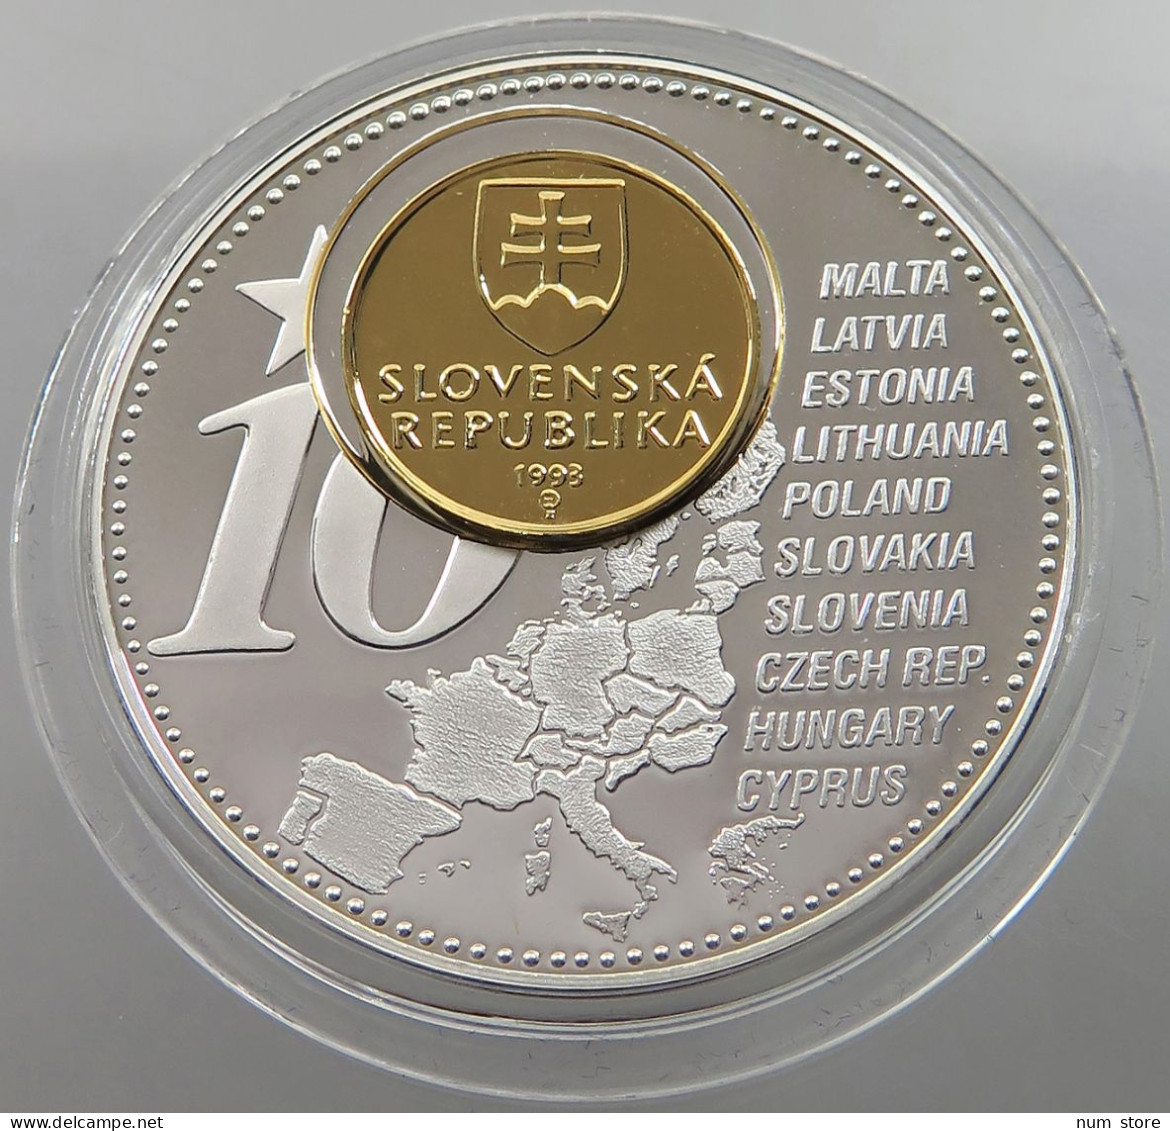 SLOVAKIA MEDAL 2006 THE FORTHCOMING NEW EURO COUNTRIES #sm06 0695 - Eslovenia